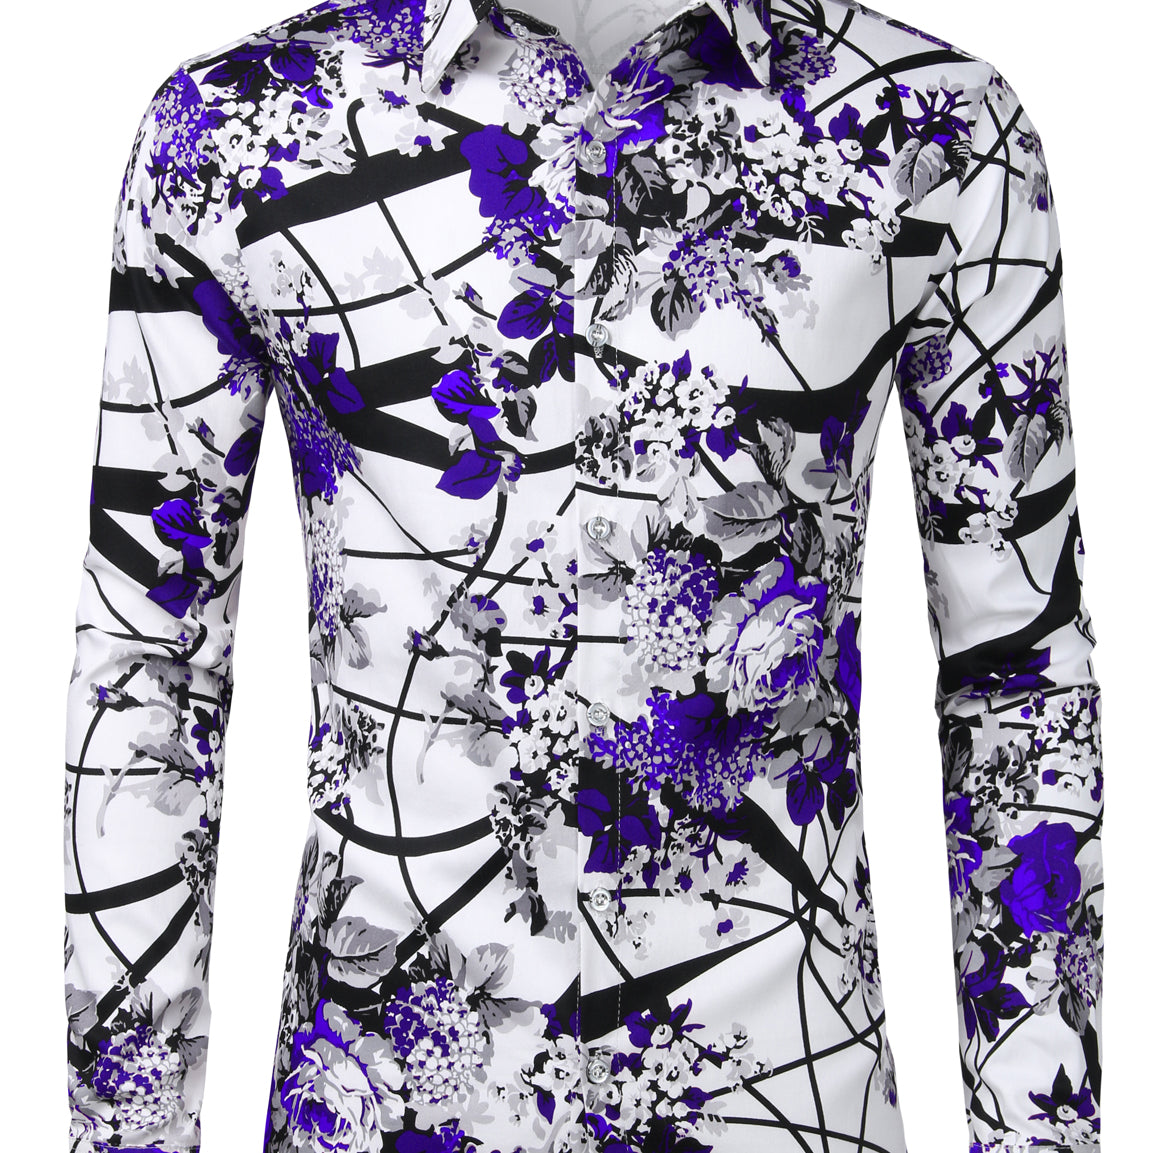 Men's Cotton Floral Print Casual Button Up Long Sleeve Dress Shirt